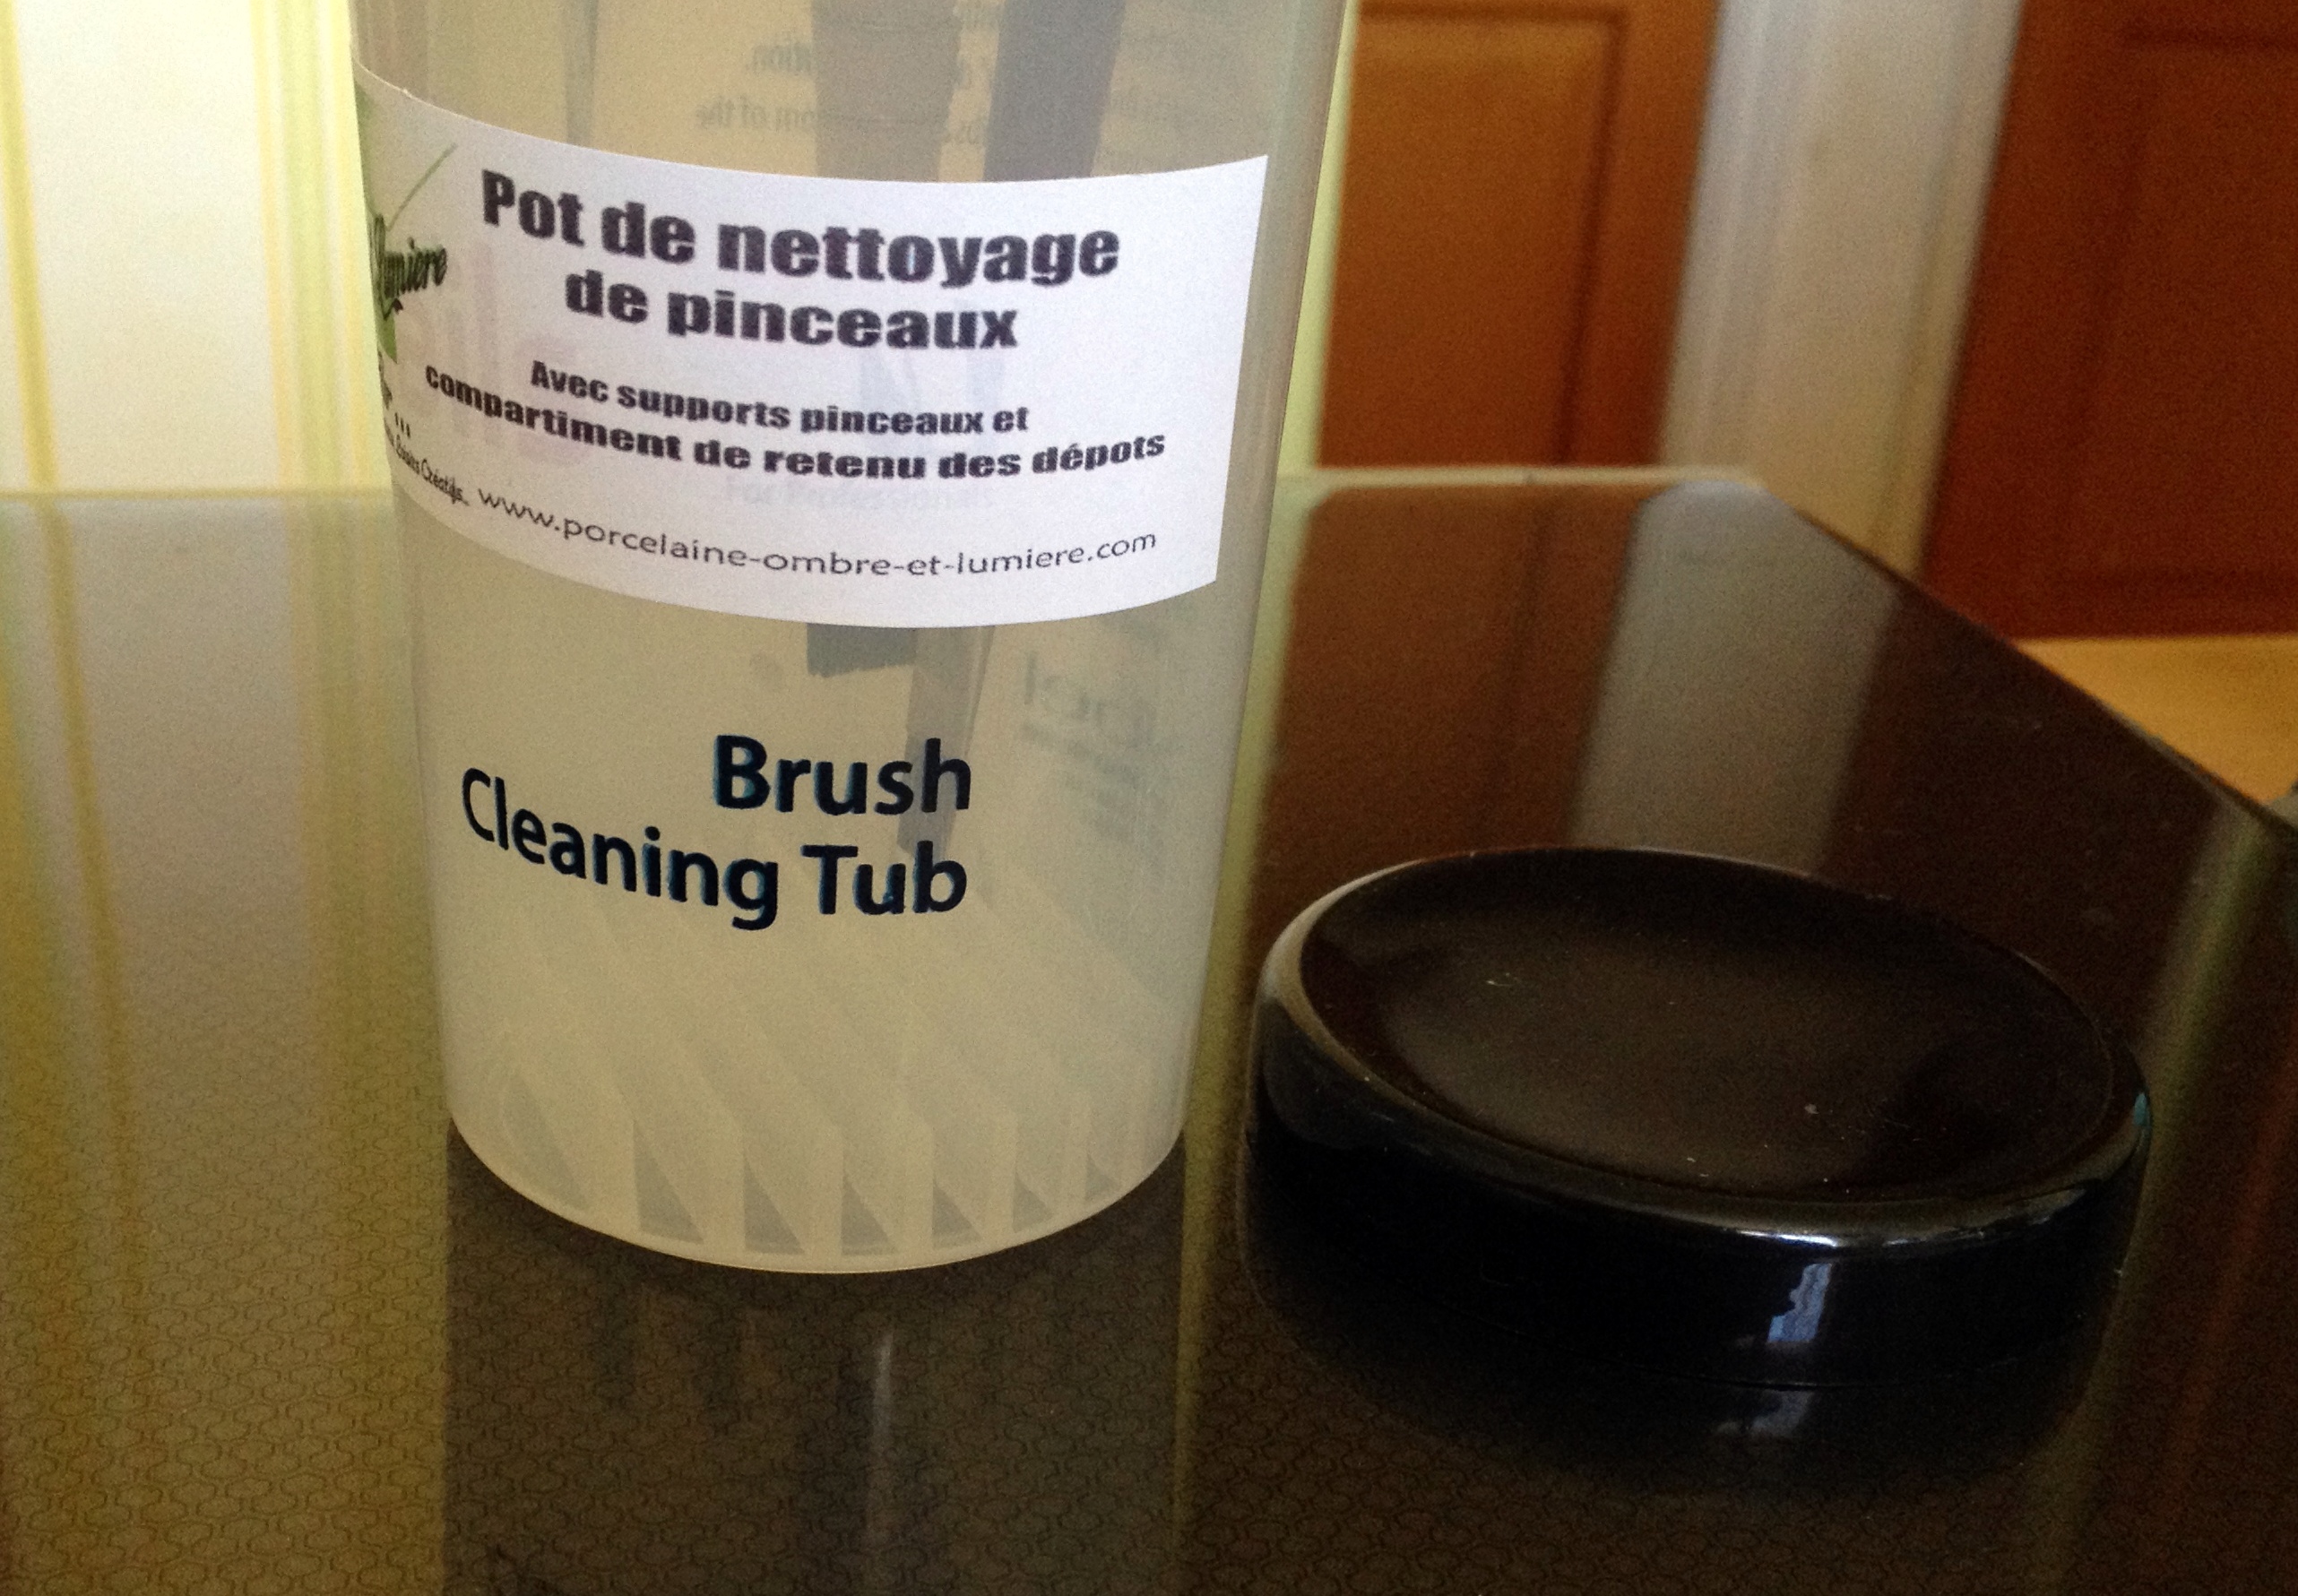 Brush Cleaning Tub